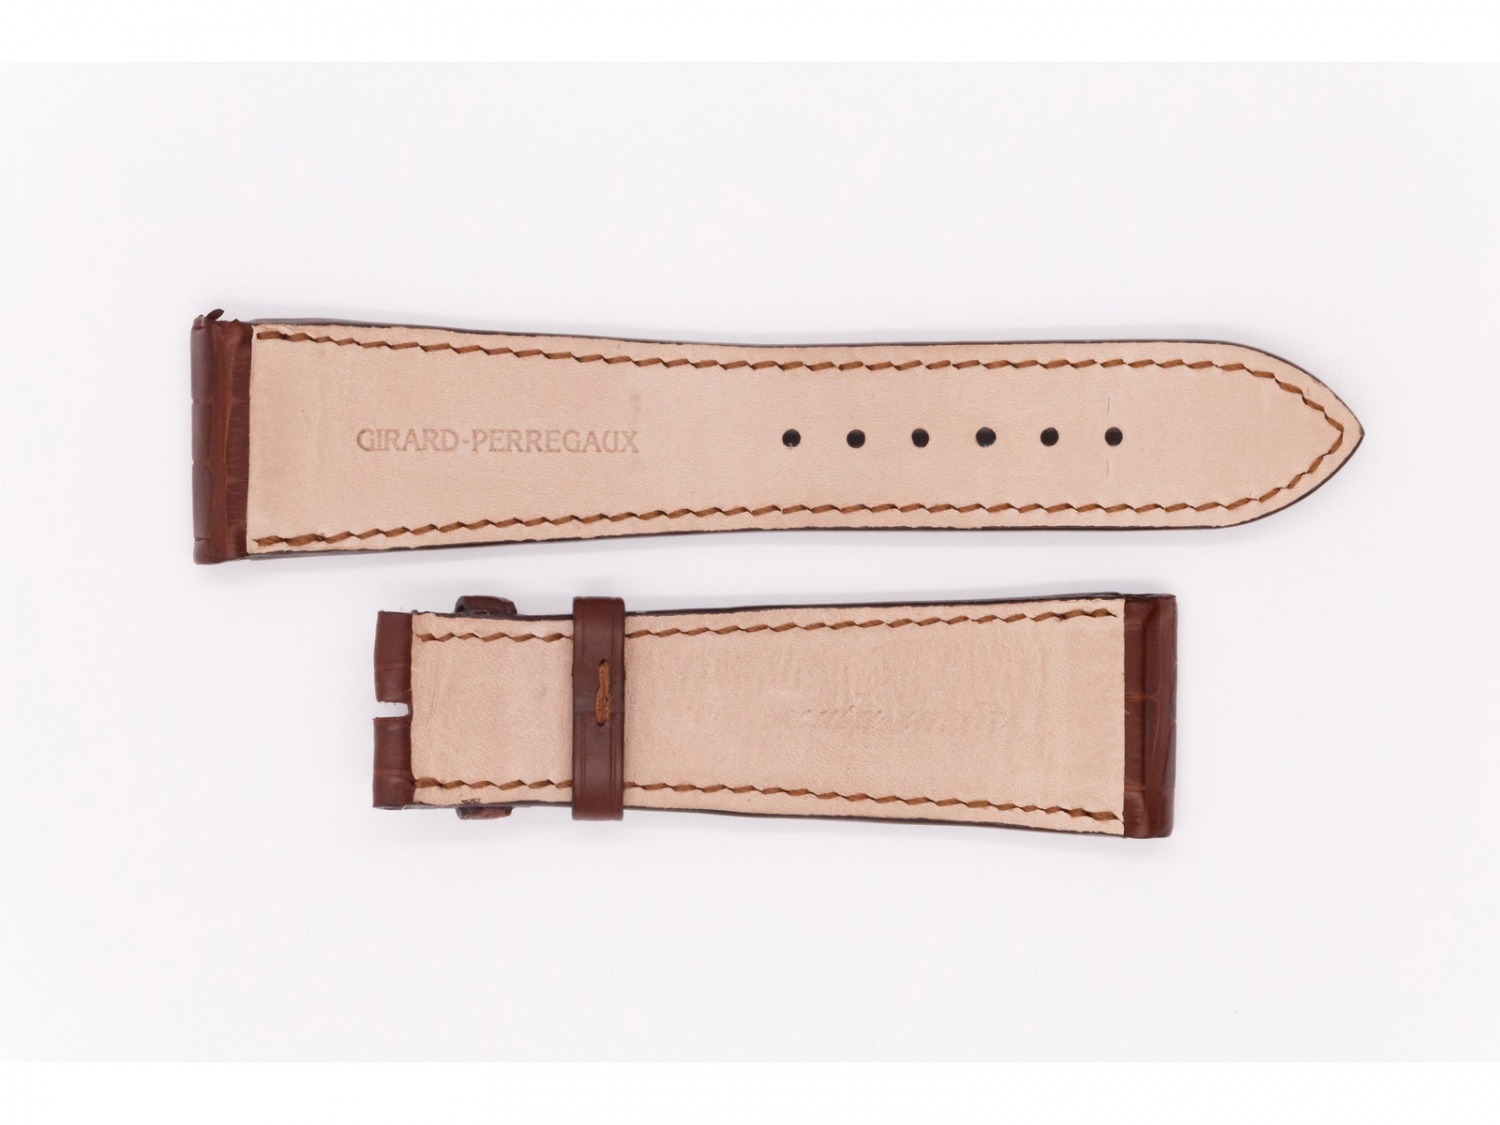 Leather Girard - Perregaux Strap, brown